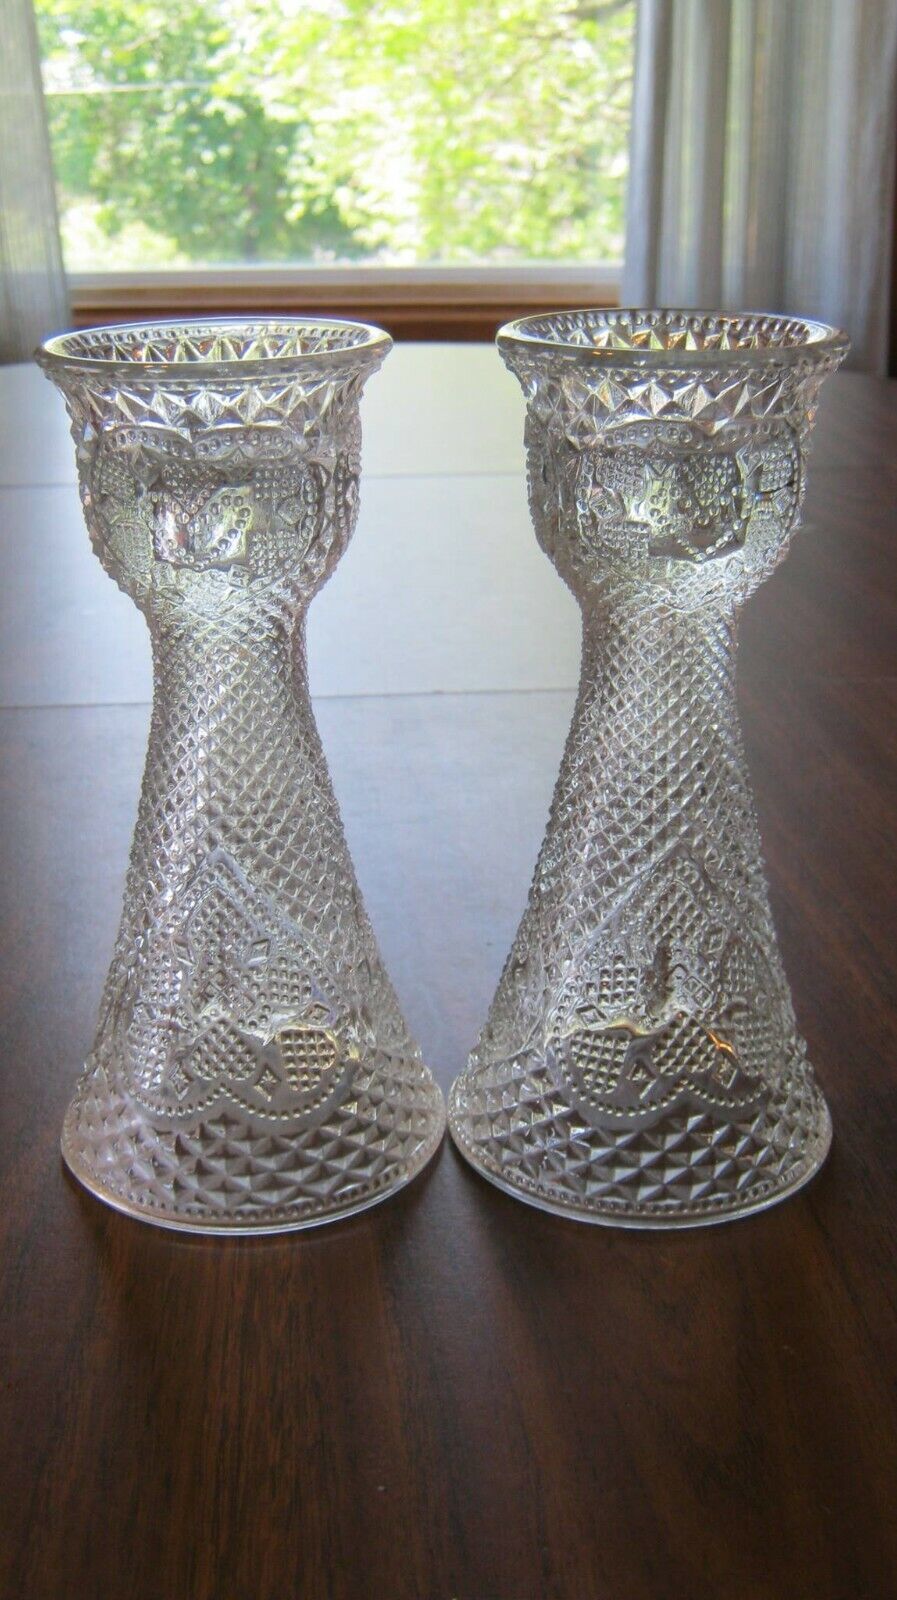 Primary image for 2 Avon Vintage Glass Vase Candlestick Holders Hearts Fostoria